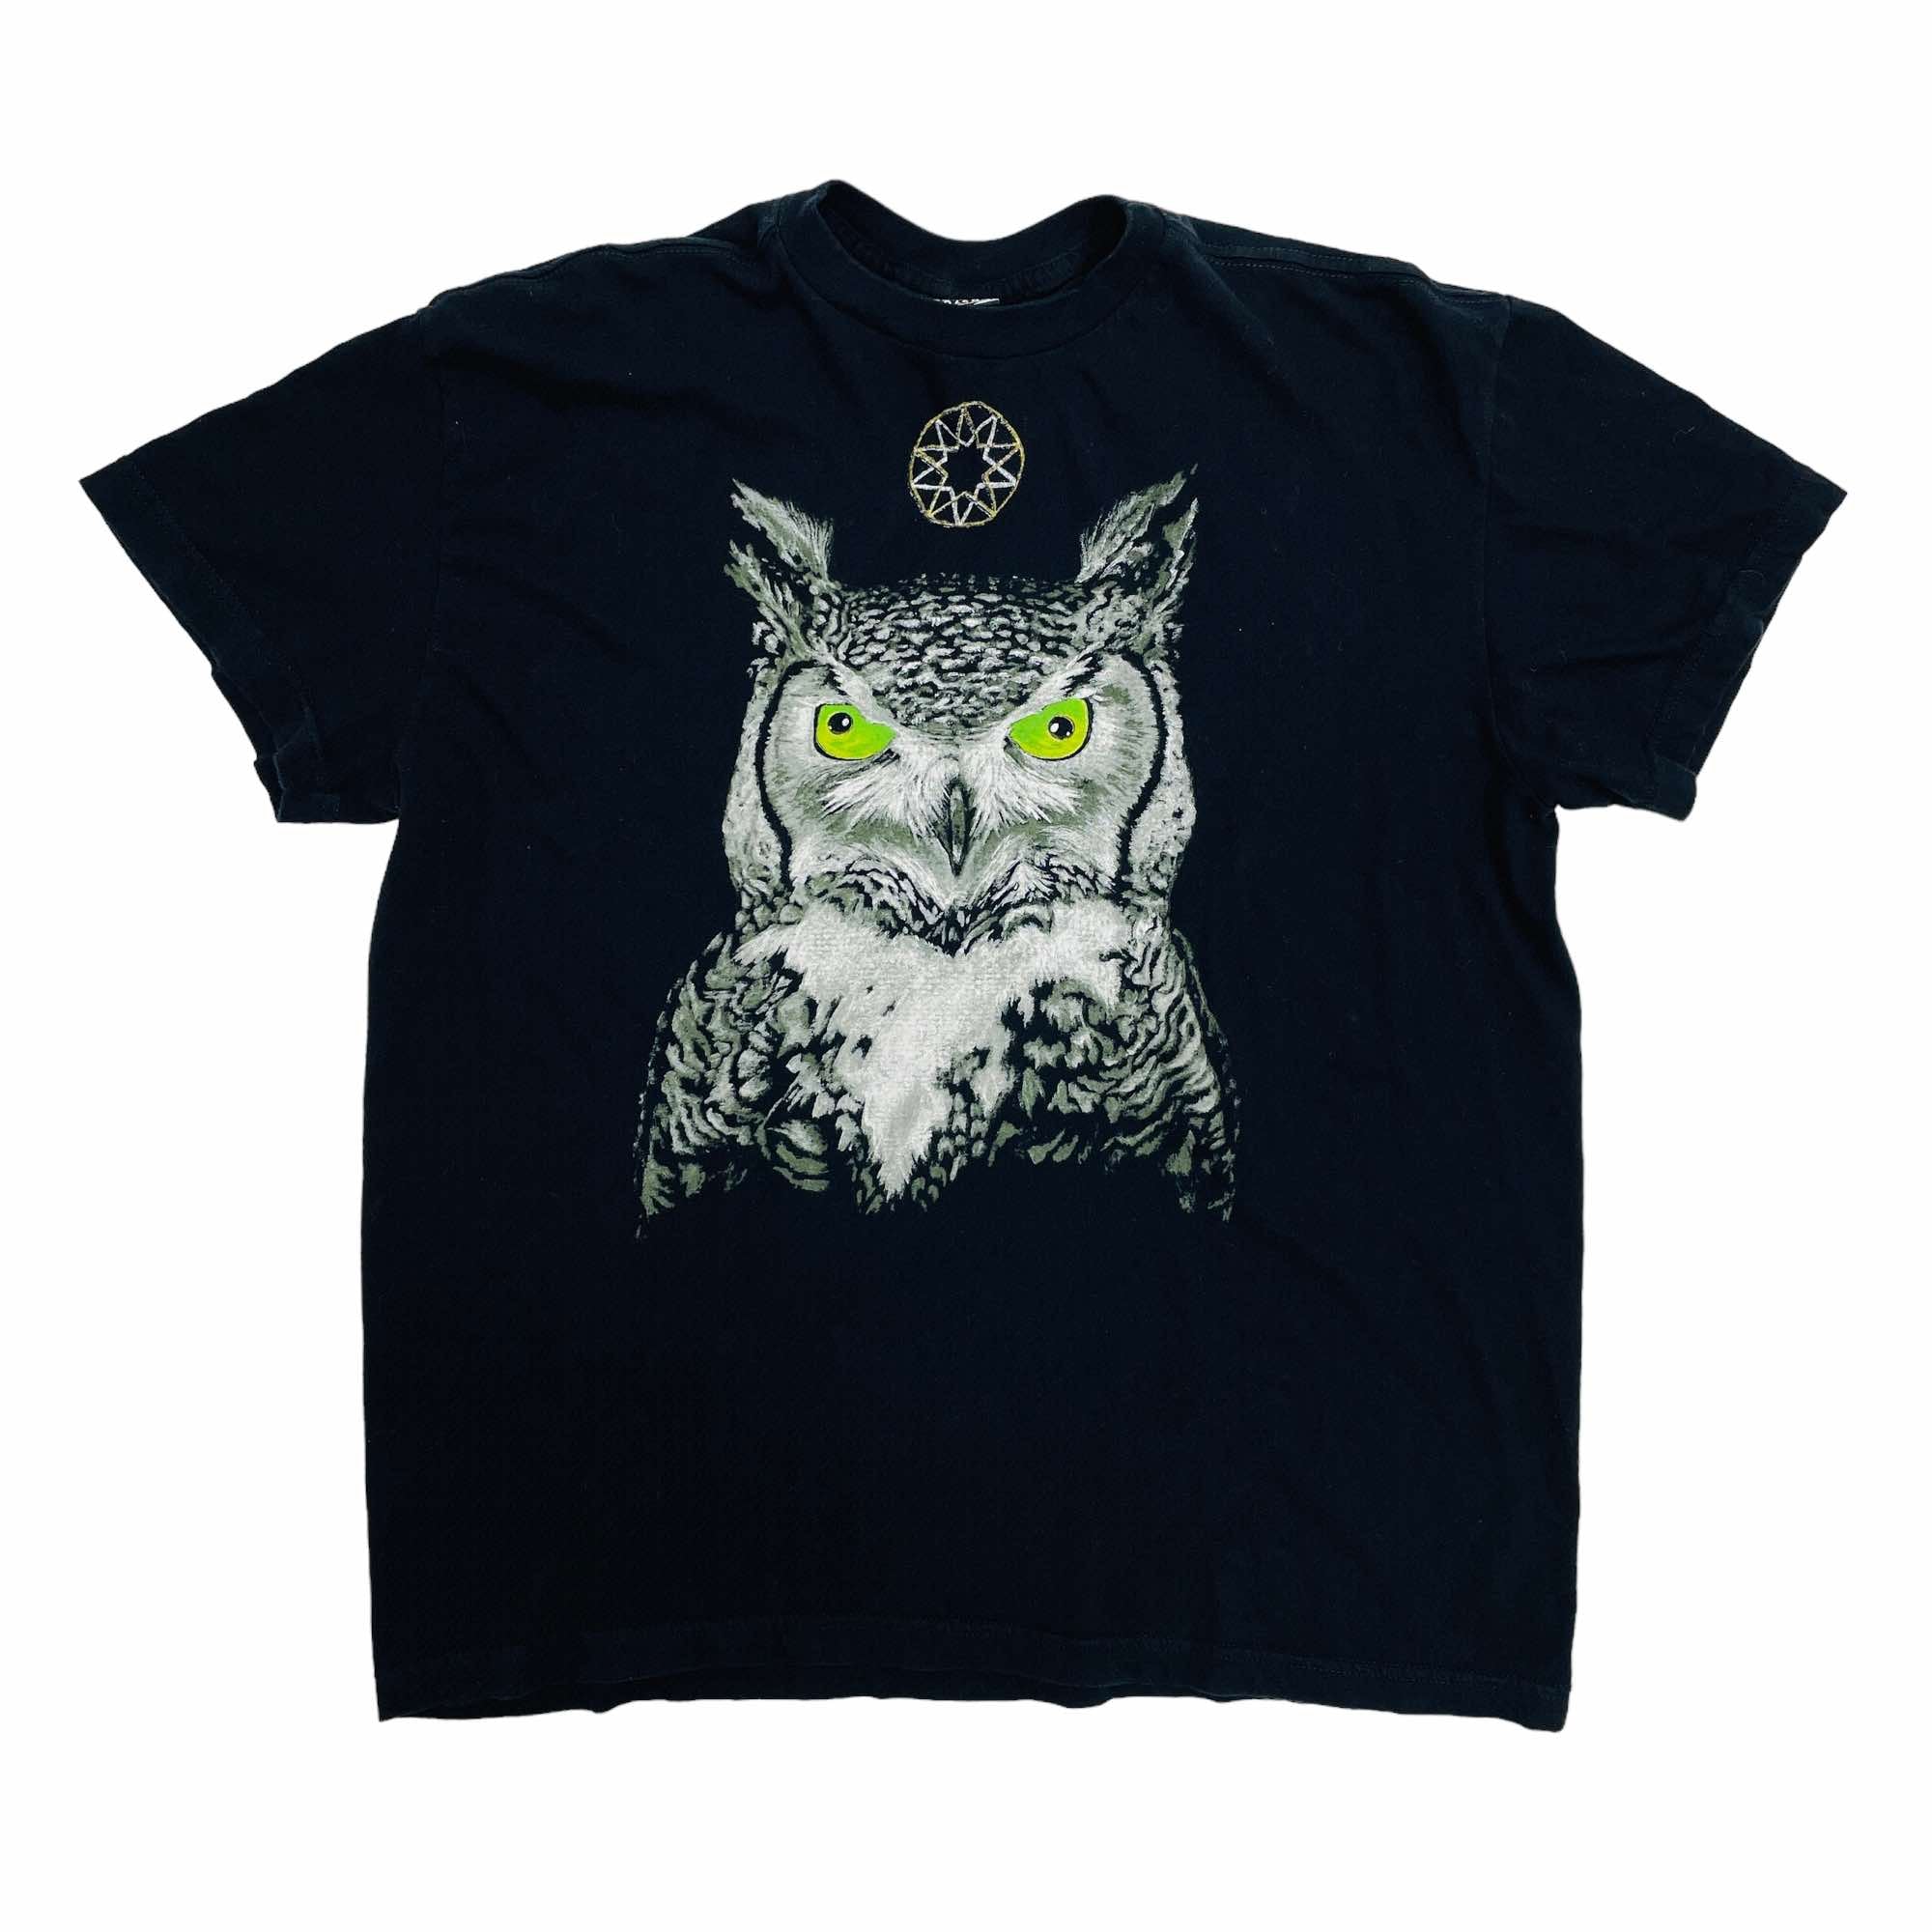 Volcom Owl Graphic T-Shirt- Large